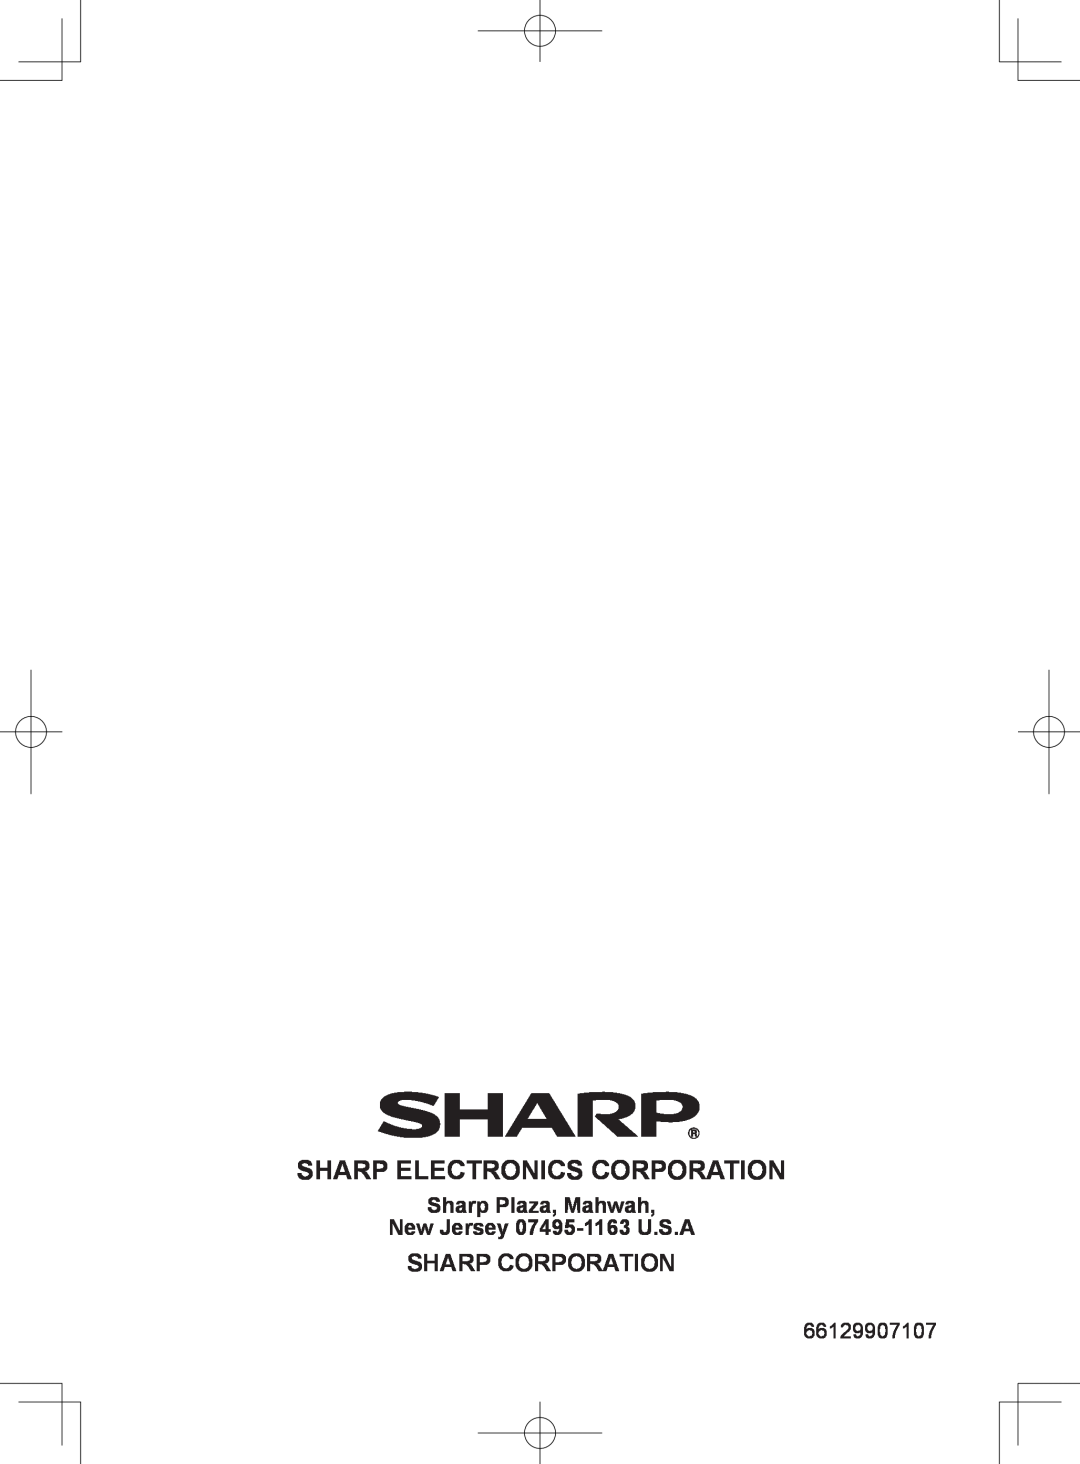 Sharp CV-2P10SC Sharp Plaza, Mahwah New Jersey 07495-1163U.S.A, Sharp Electronics Corporation, Sharp Corporation 